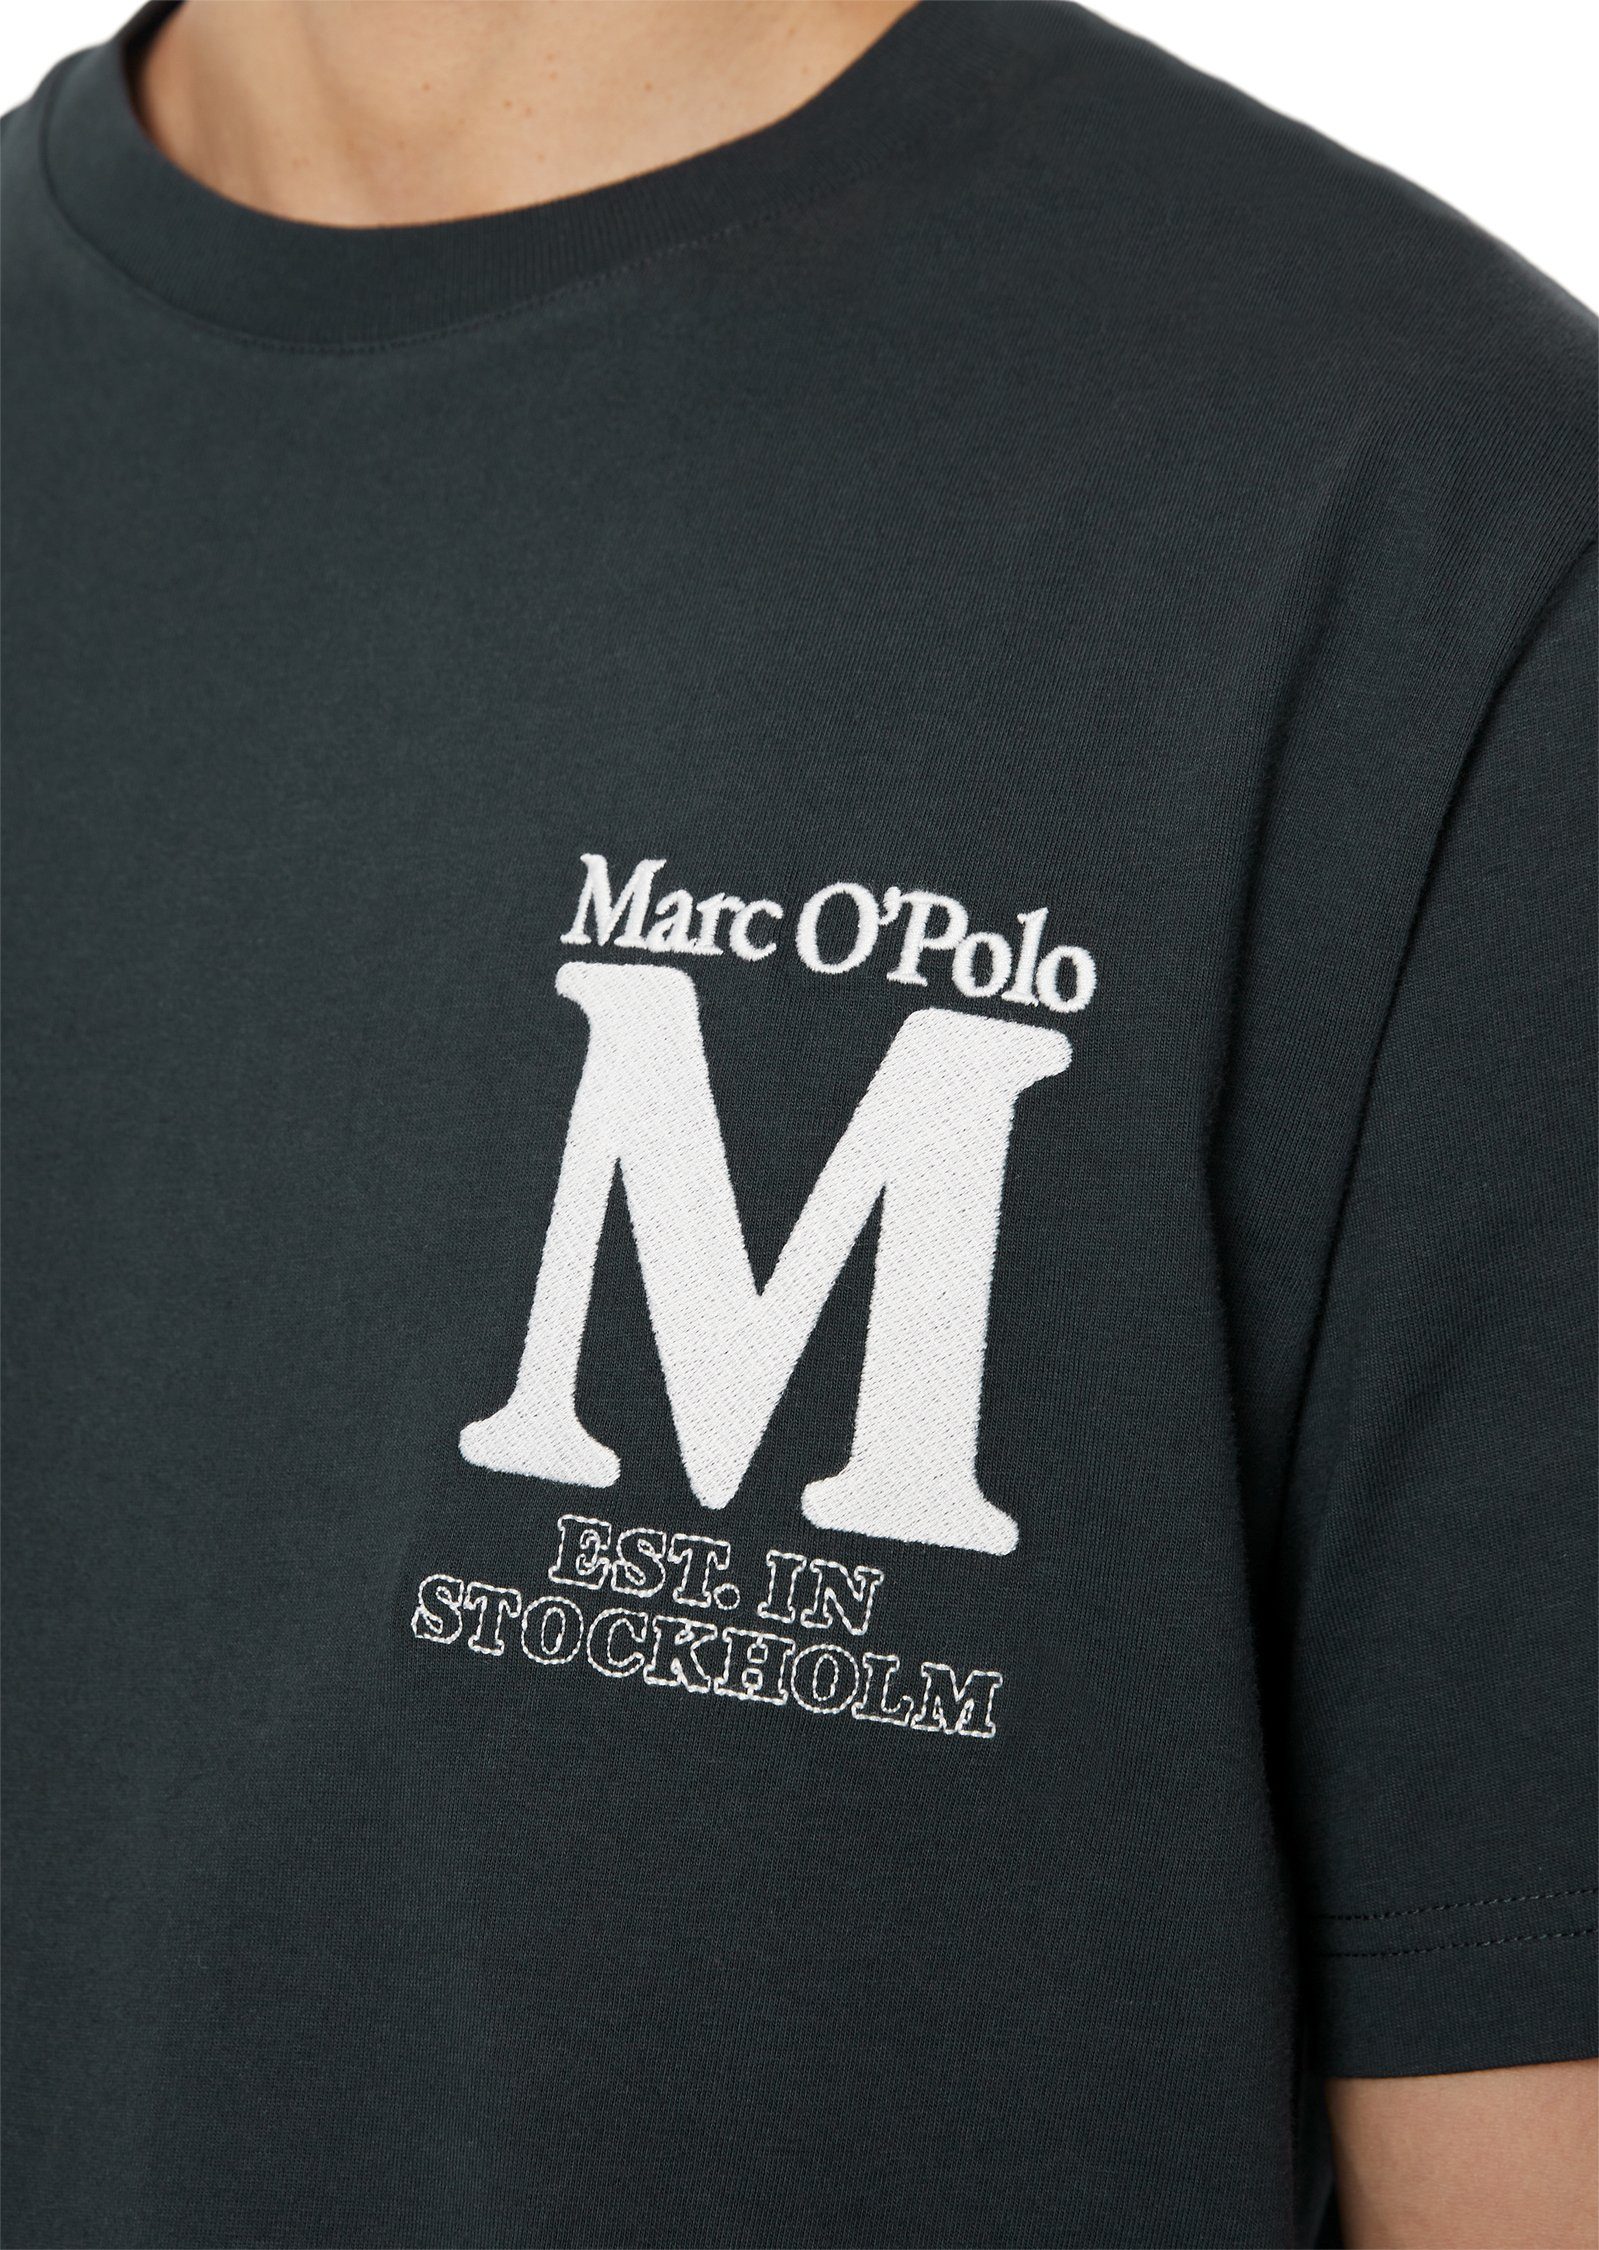 T-Shirt dark navy O'Polo Marc